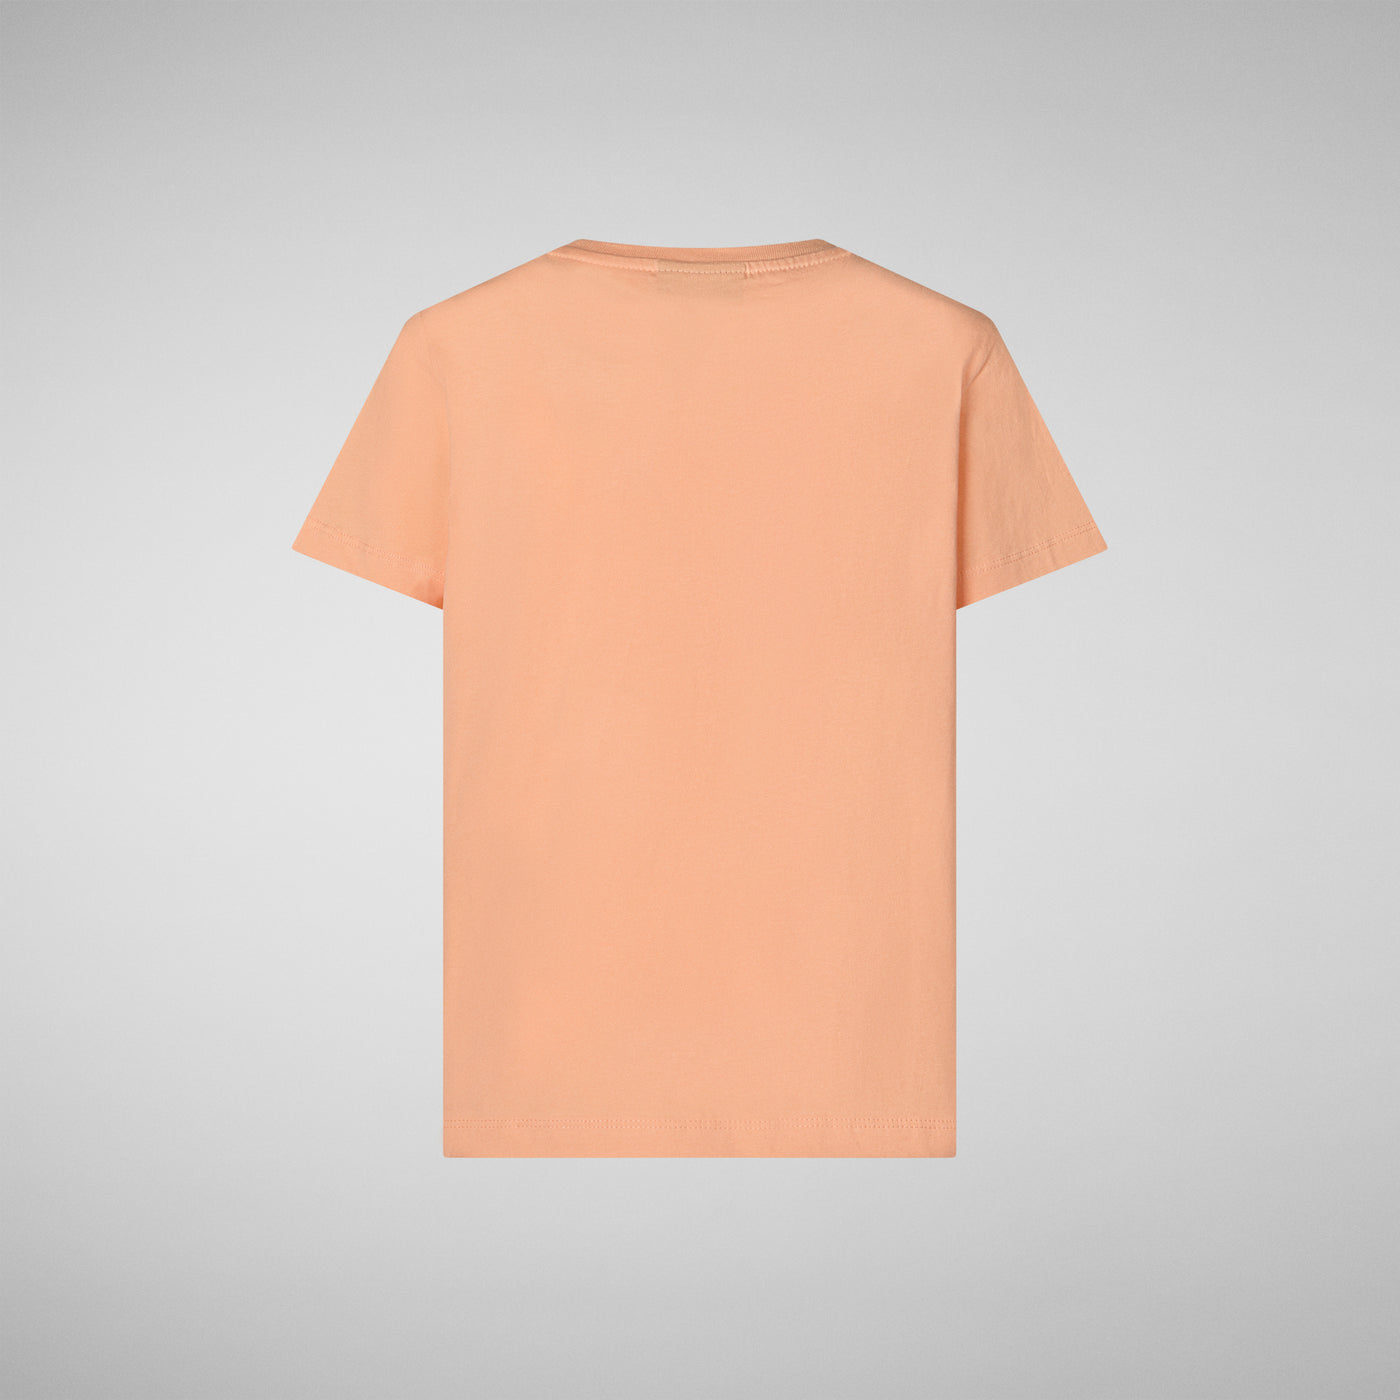 Product Back View of Unisex Kids' Asa Crewneck T-Shirt in Papaya Orange